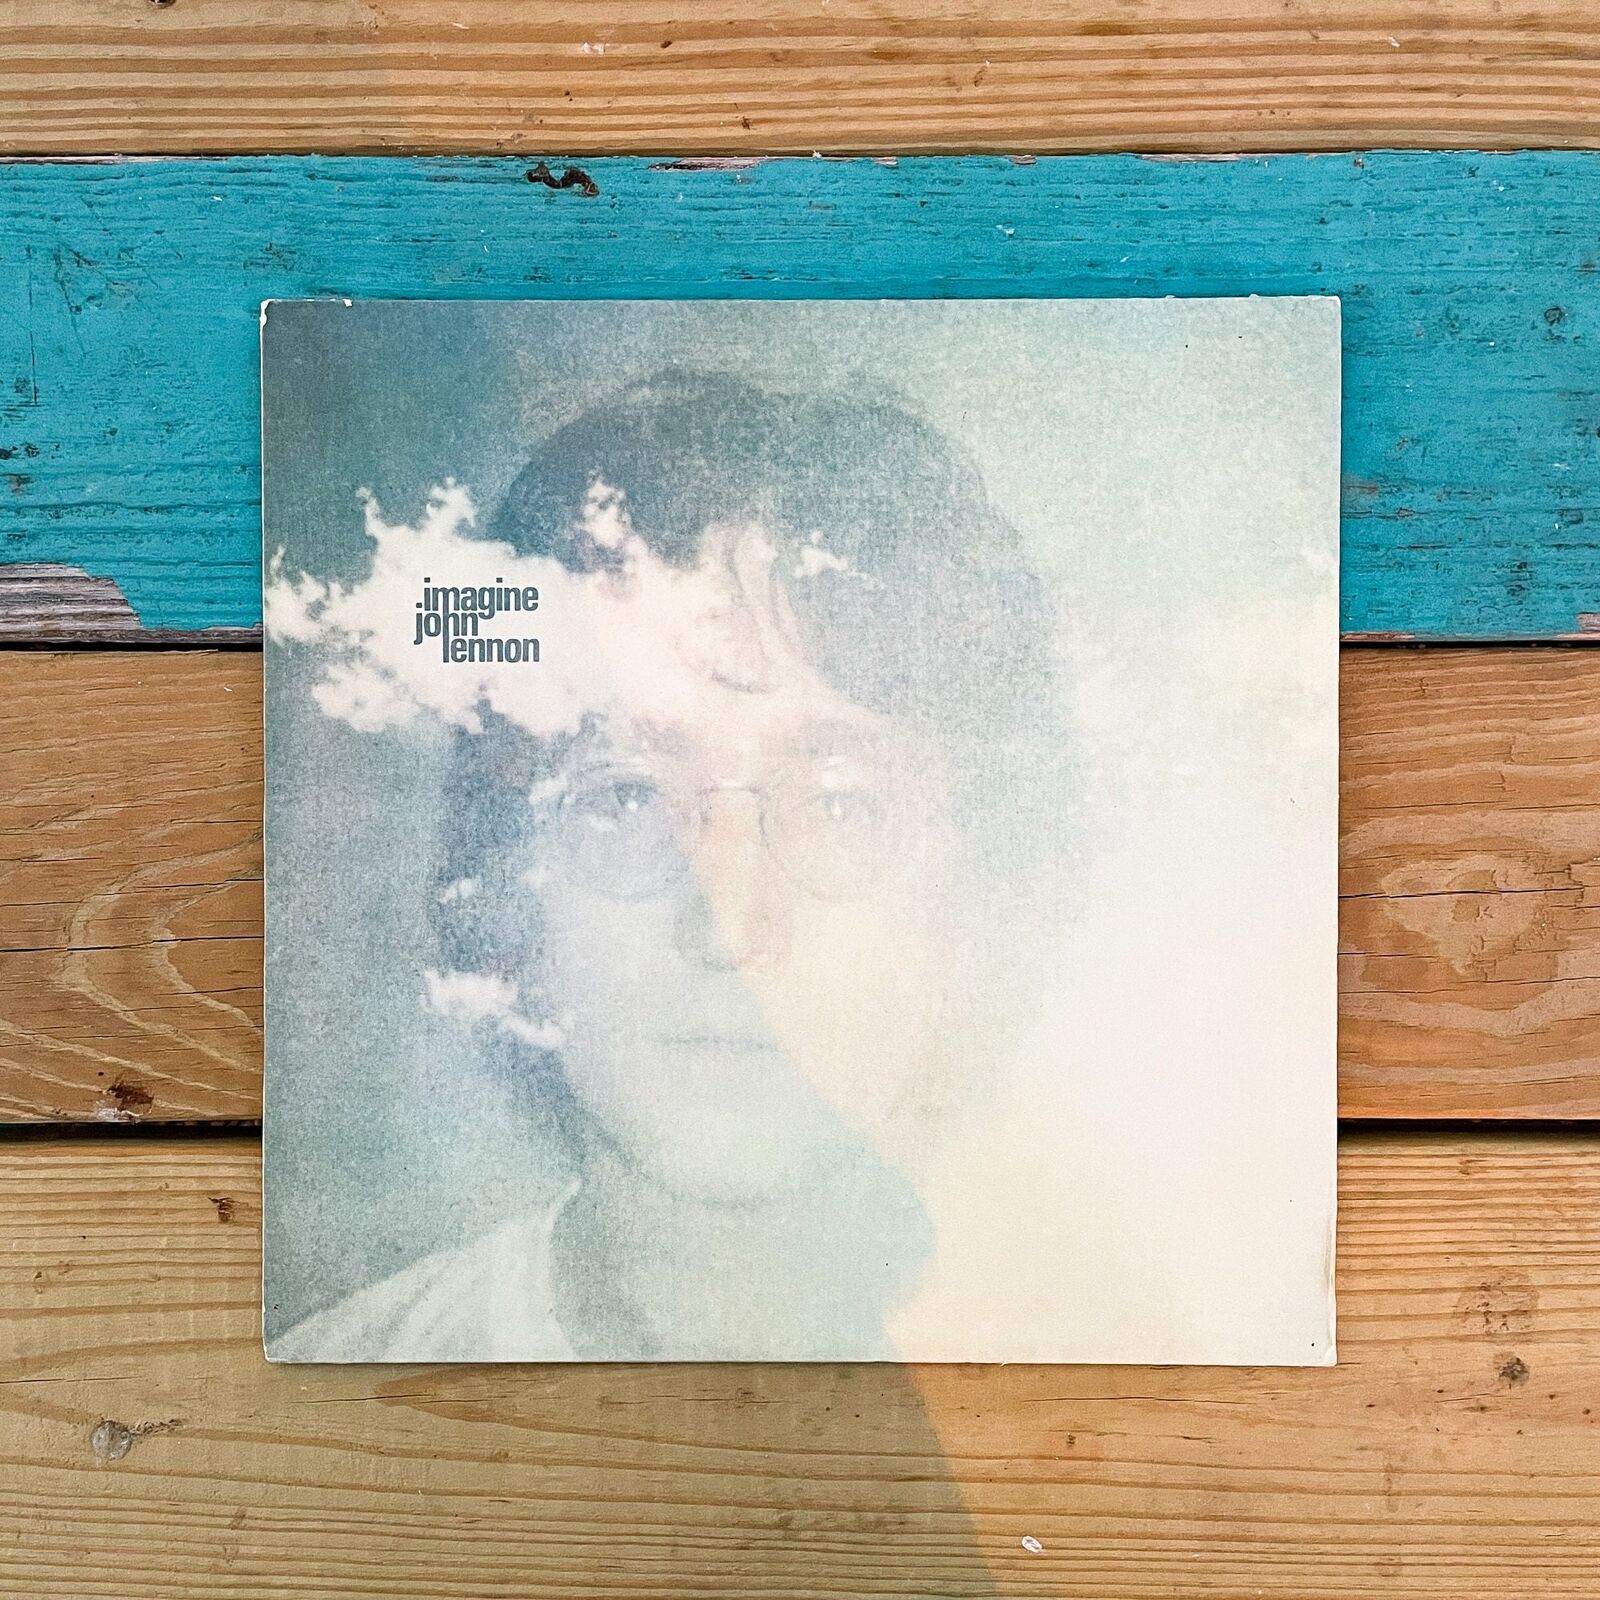 John Lennon - Imagine - Vinyl LP Record - 1971